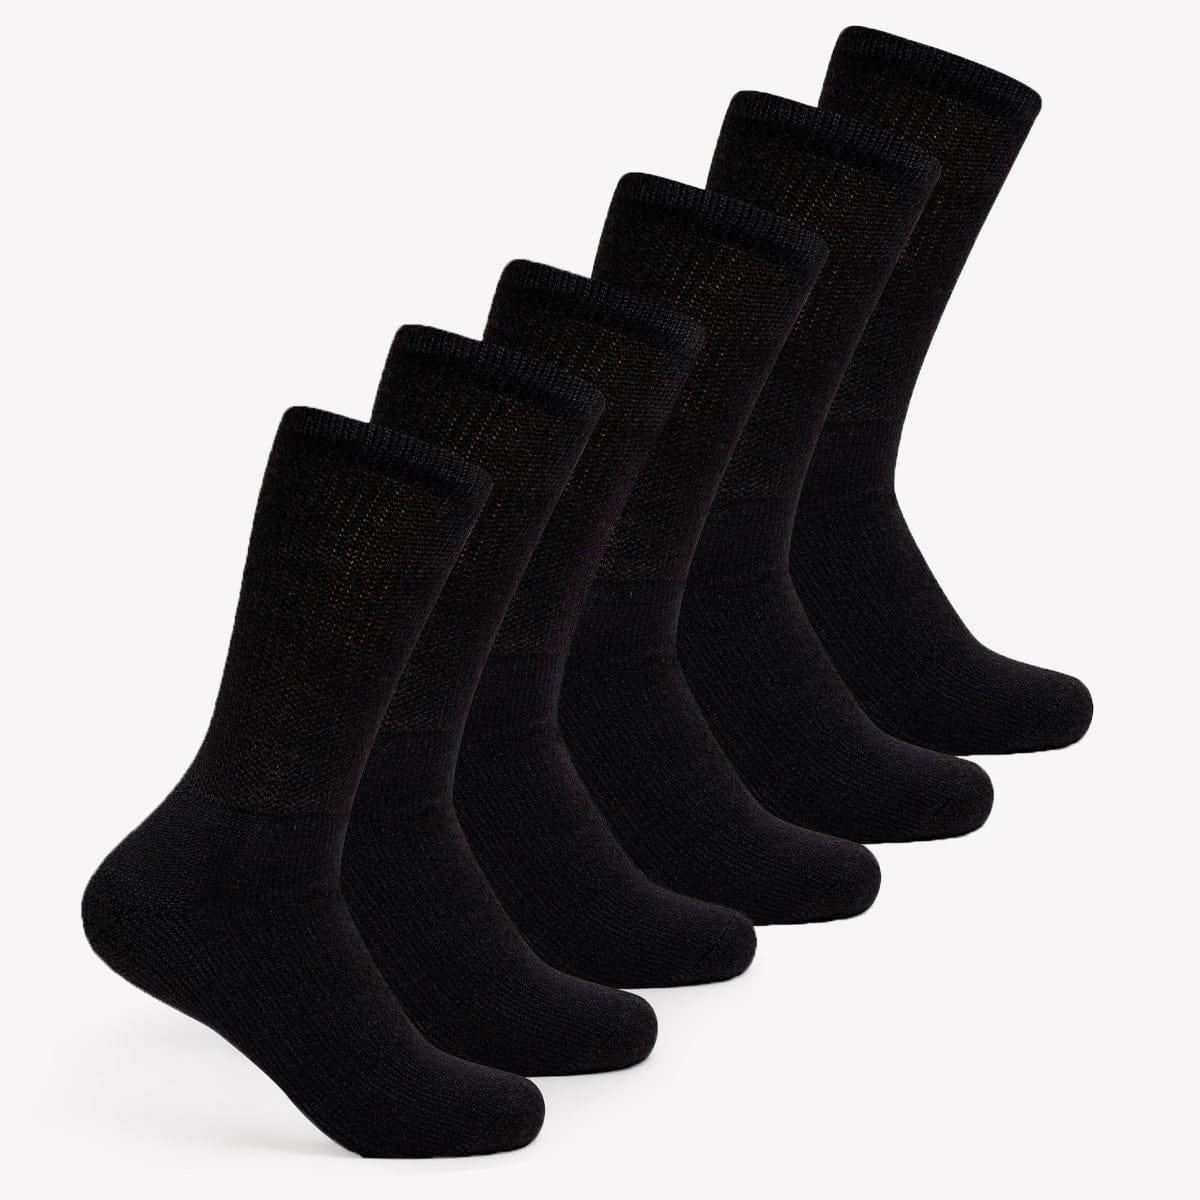 Thorlo Walking Moderate Cushion Crew Socks  -  Medium / Black / 6-Pair Pack